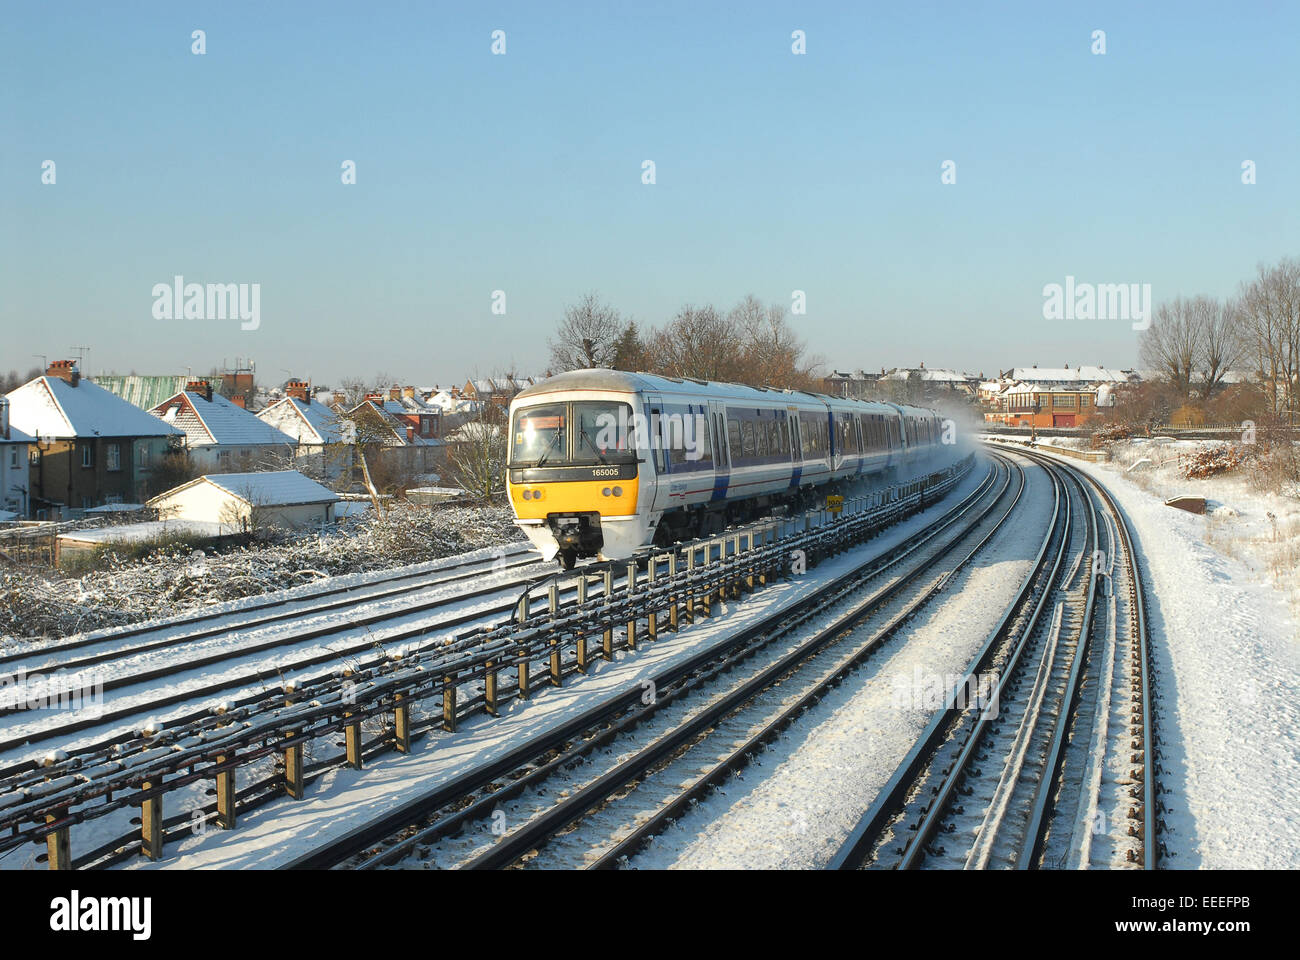 A train in the winter Stock Photo